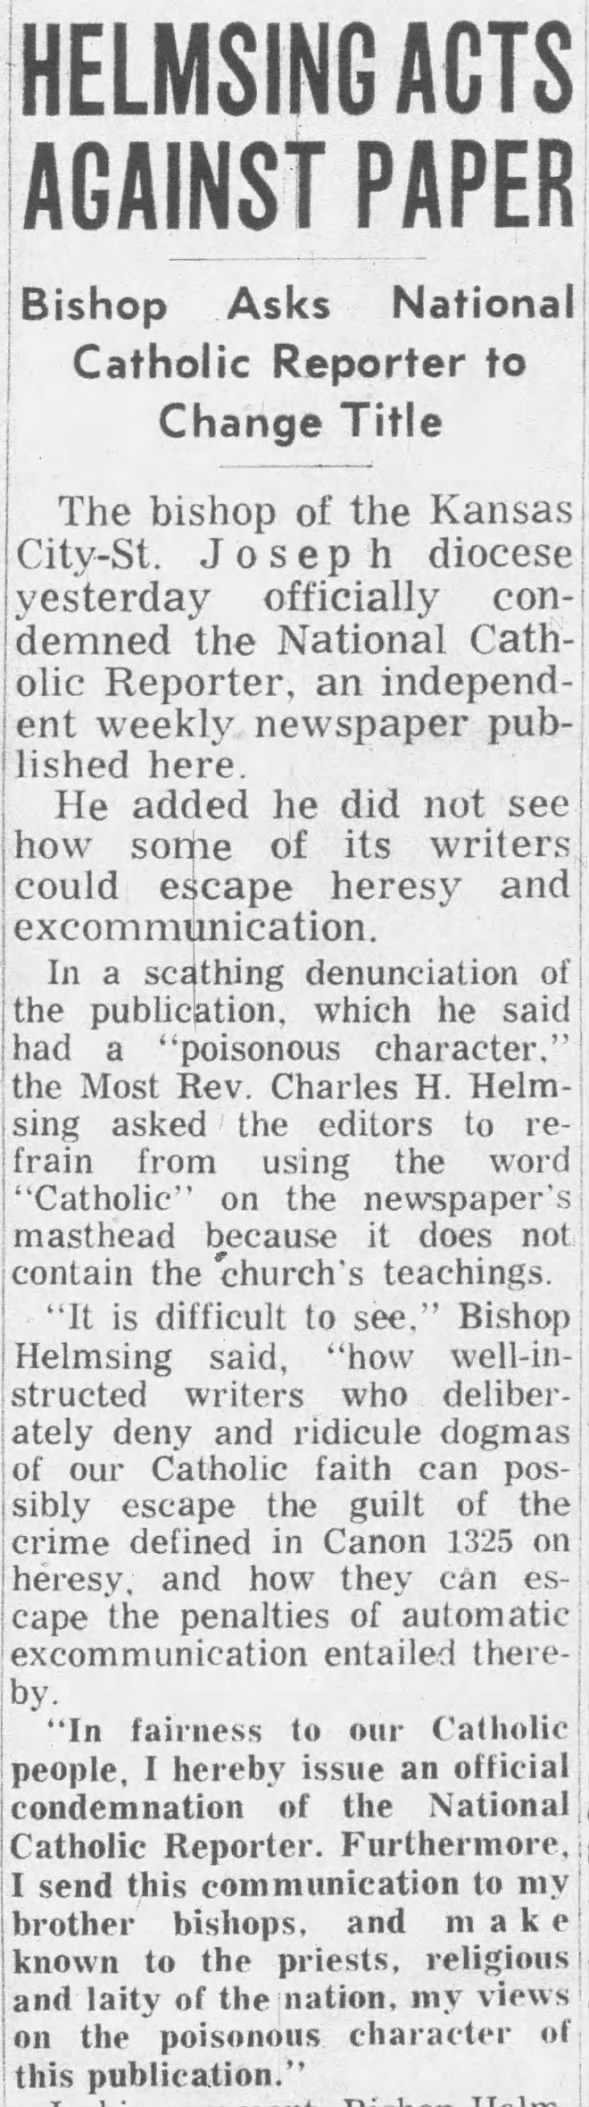 Bishop Helmsing condemns National Catholic Reporter